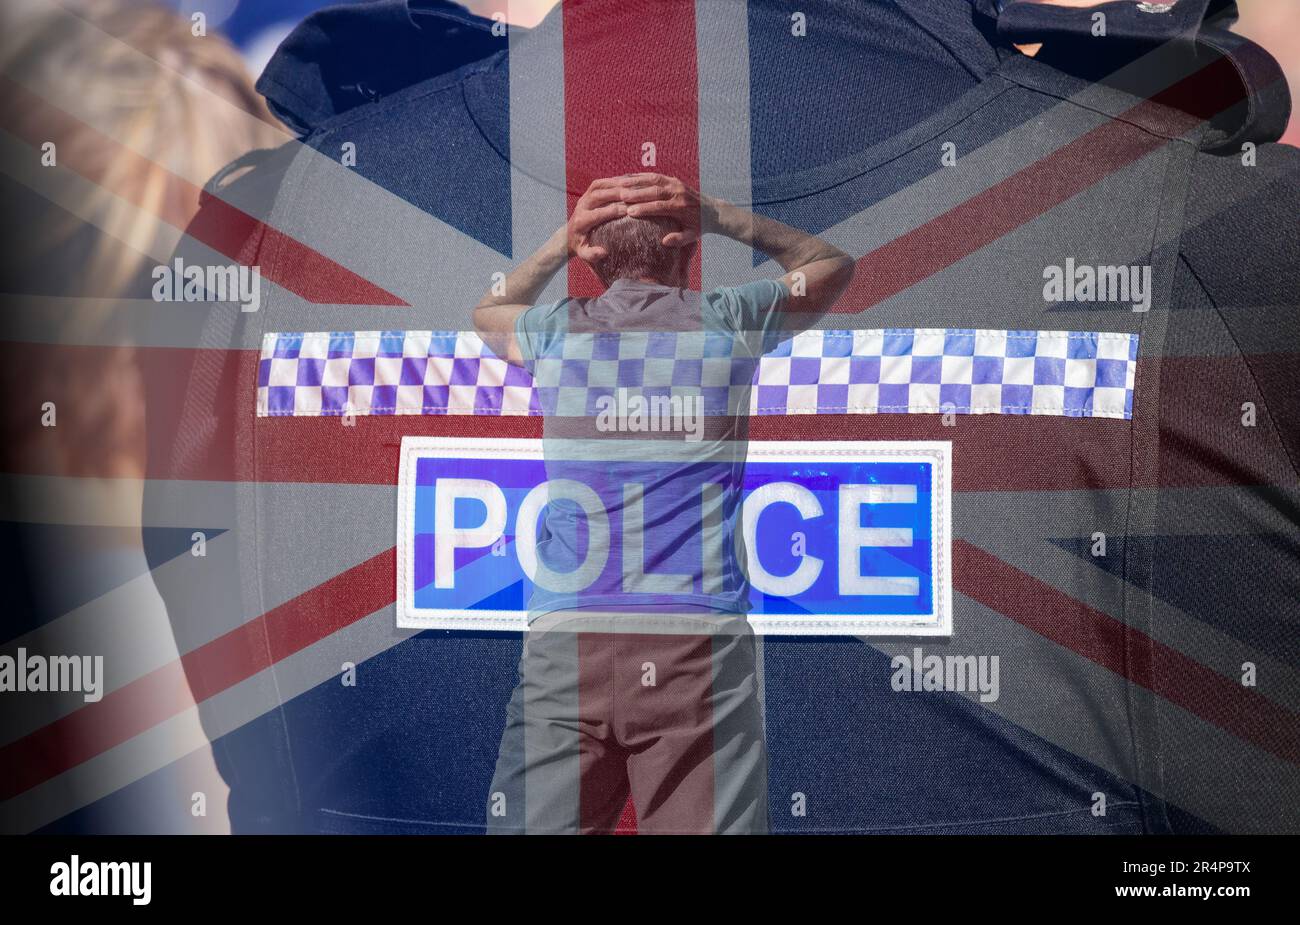 Police, met police, Mental Health Emergency Response concept britannique Banque D'Images